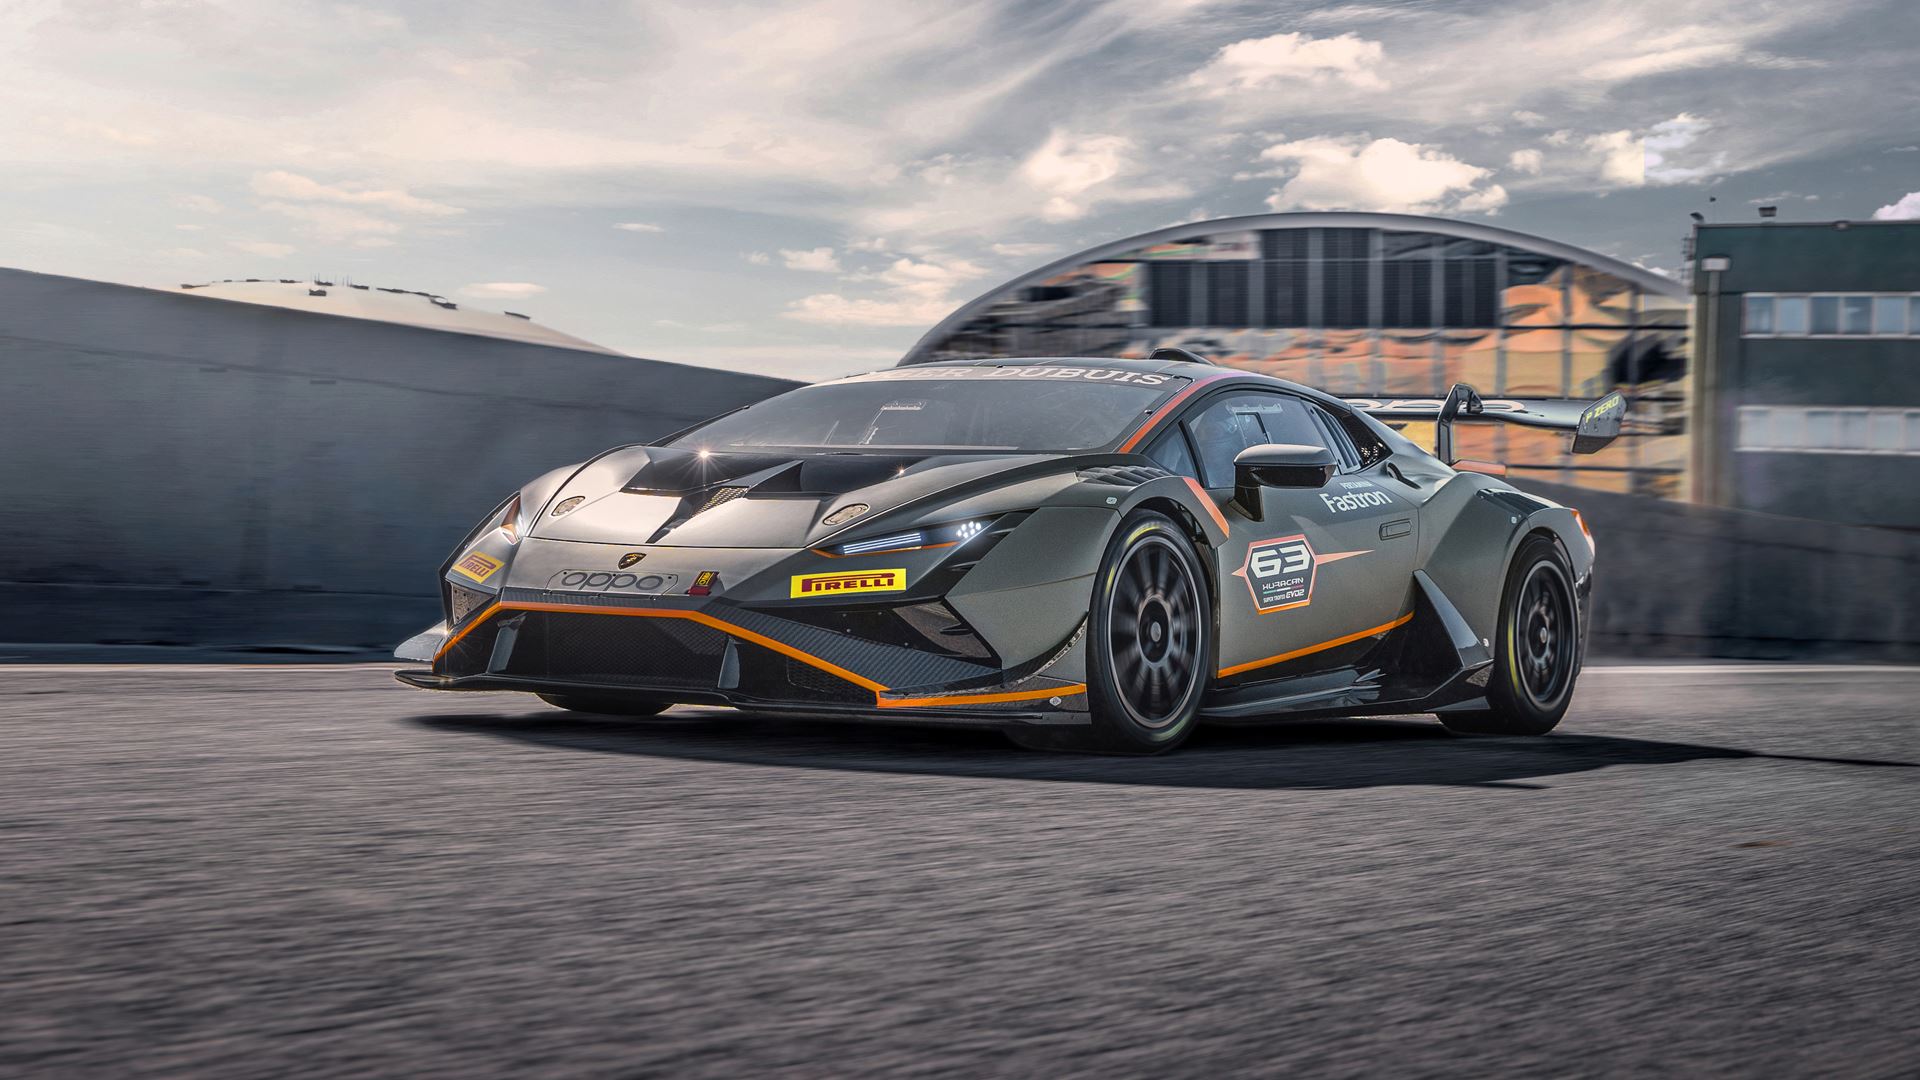 Lamborghini presents the goals achieved in 2022, the best year so far